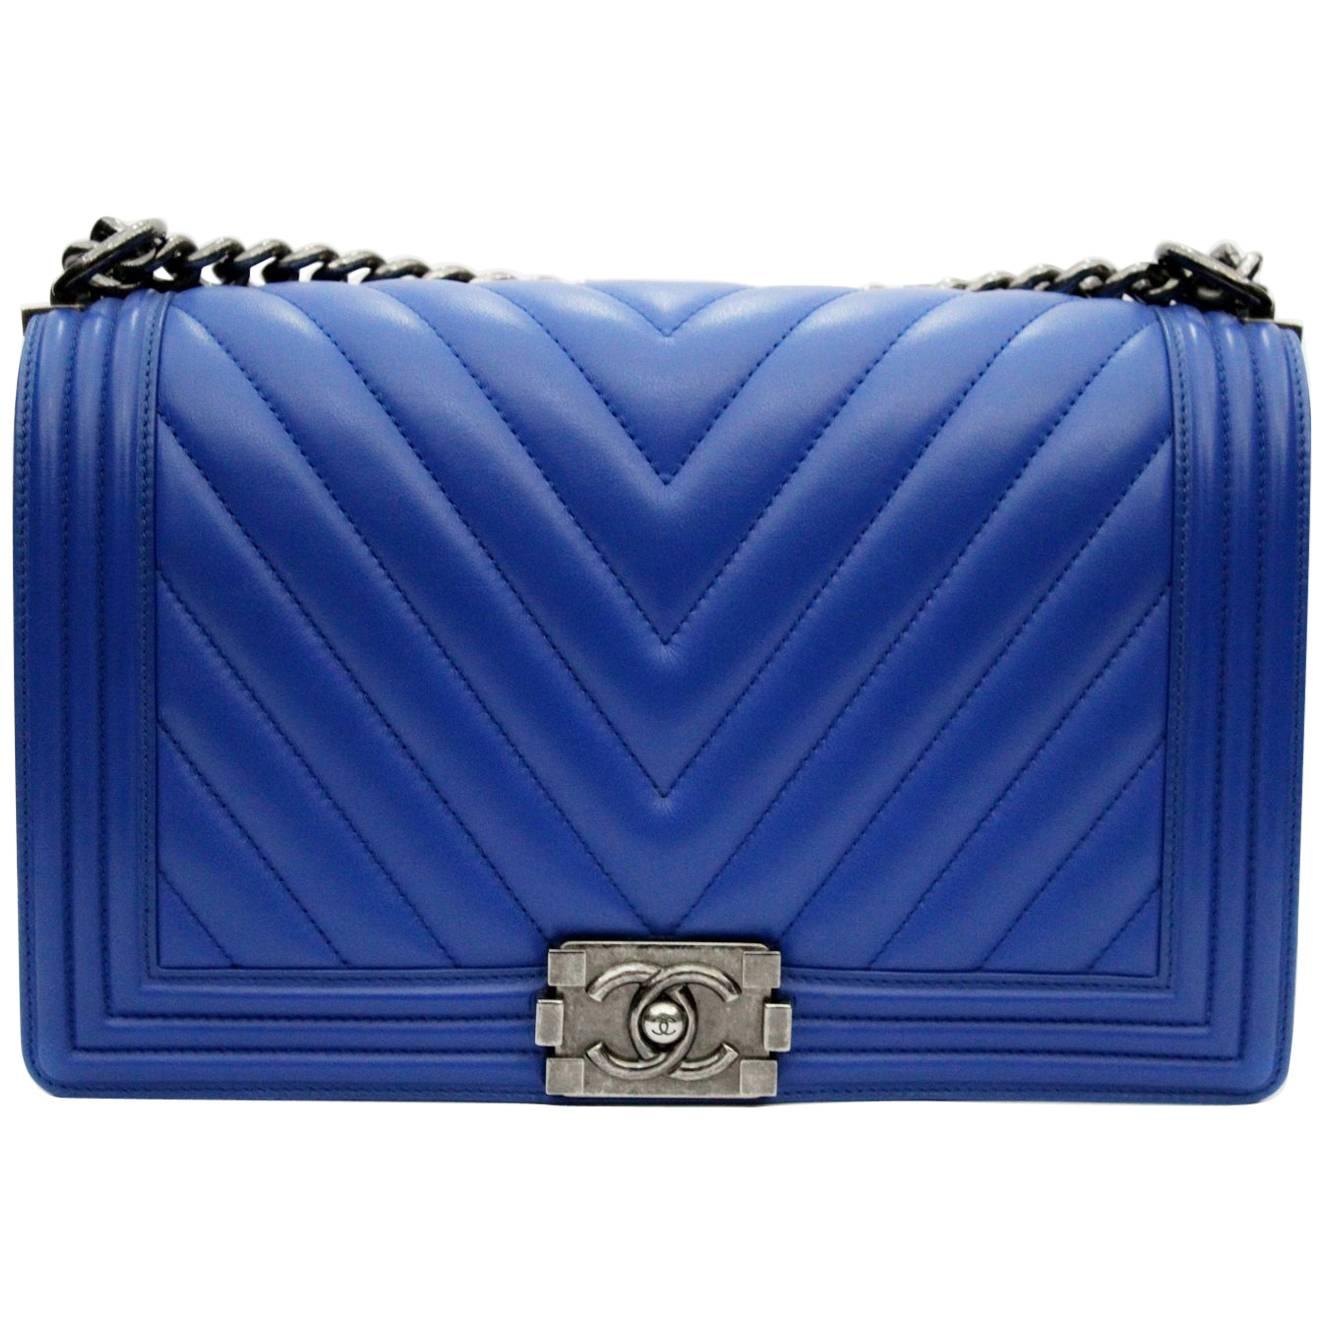 Chanel Electric Blue Leather Boy Bag